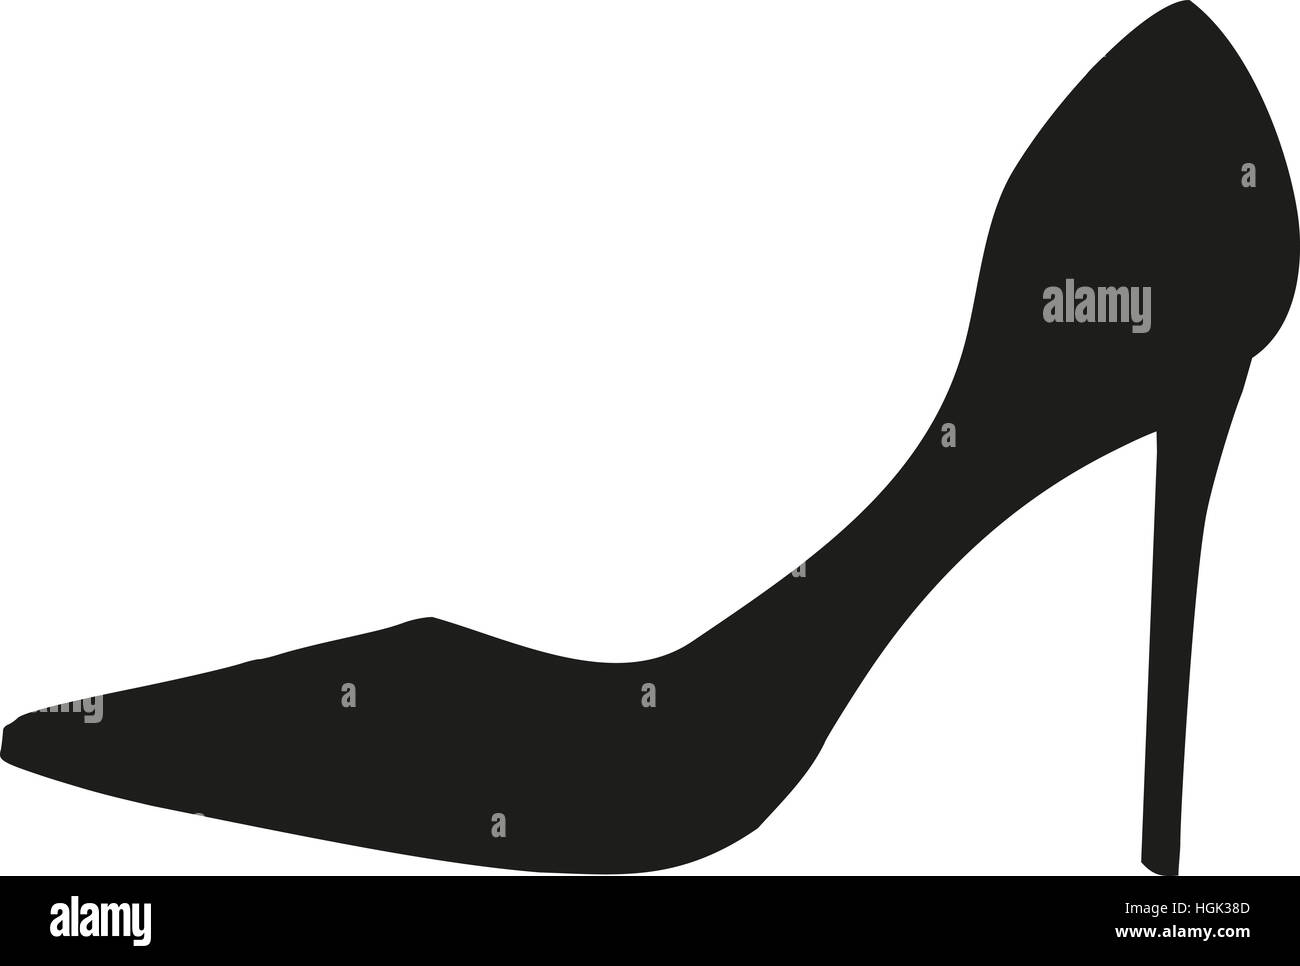 High heel icon Stock Photo - Alamy